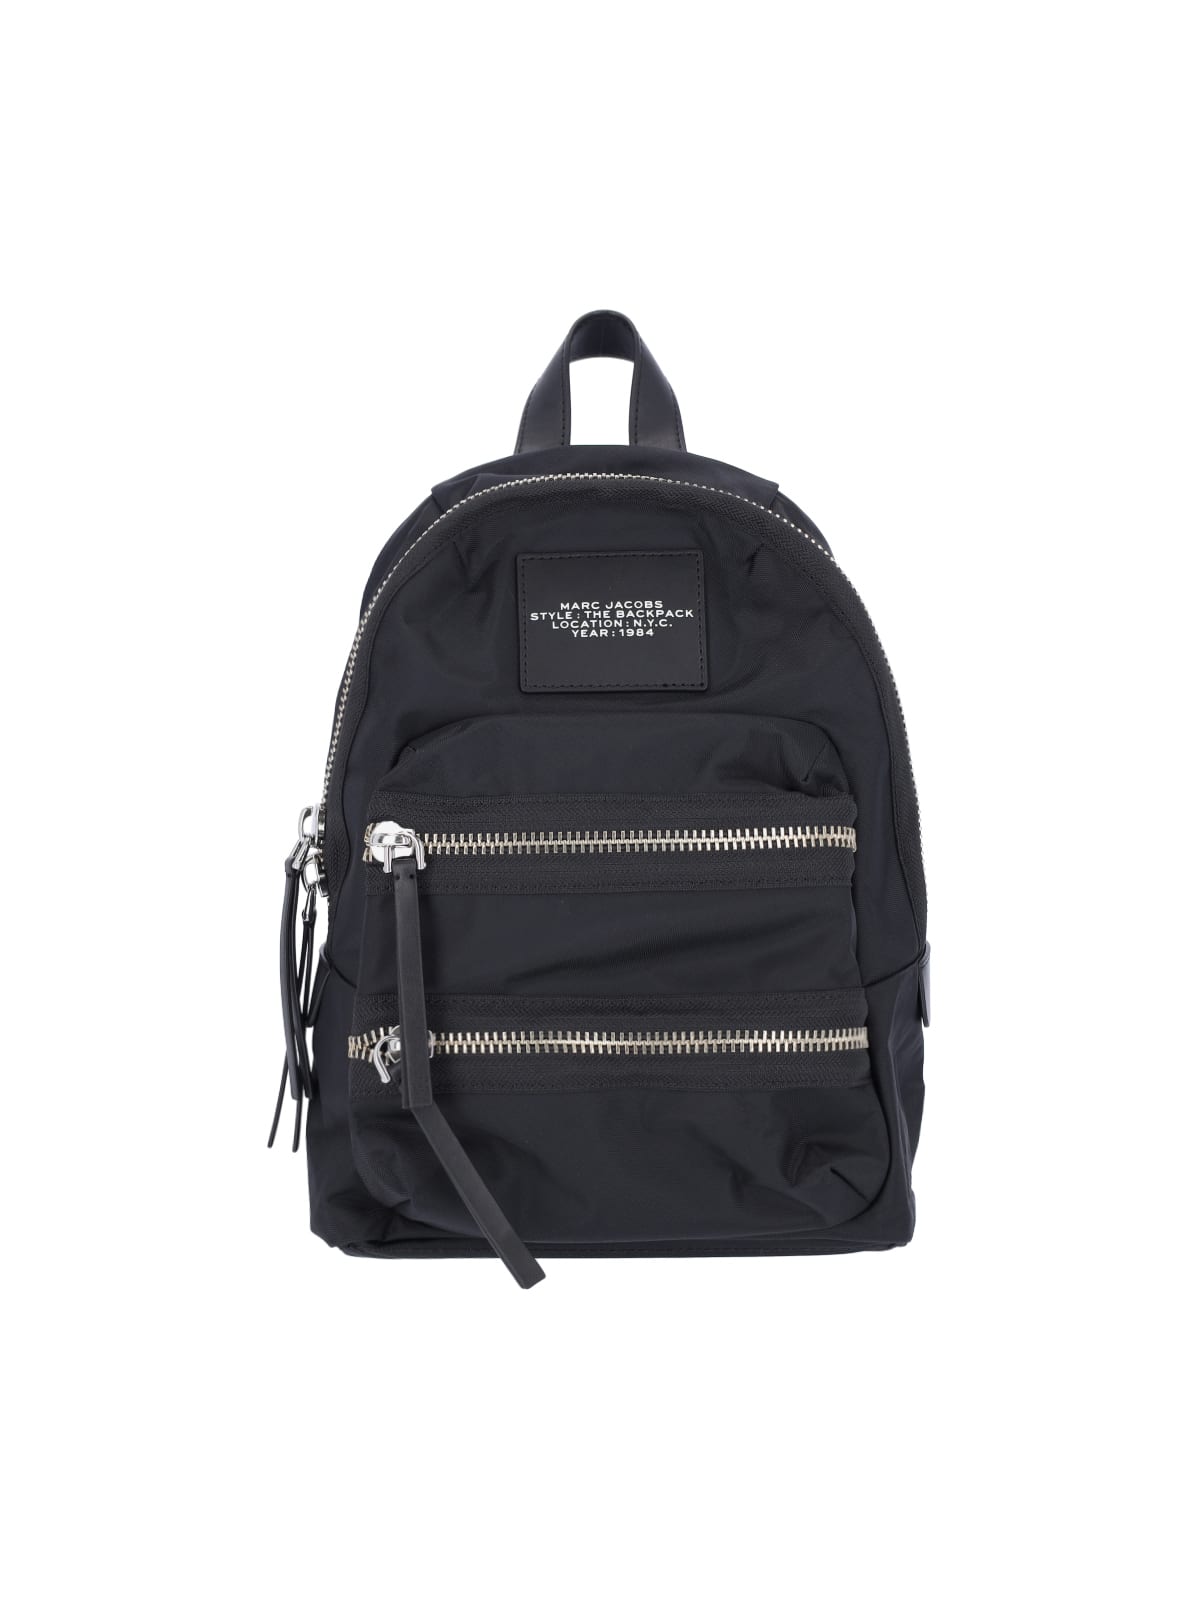 Marc Jacobs Backpack In Black